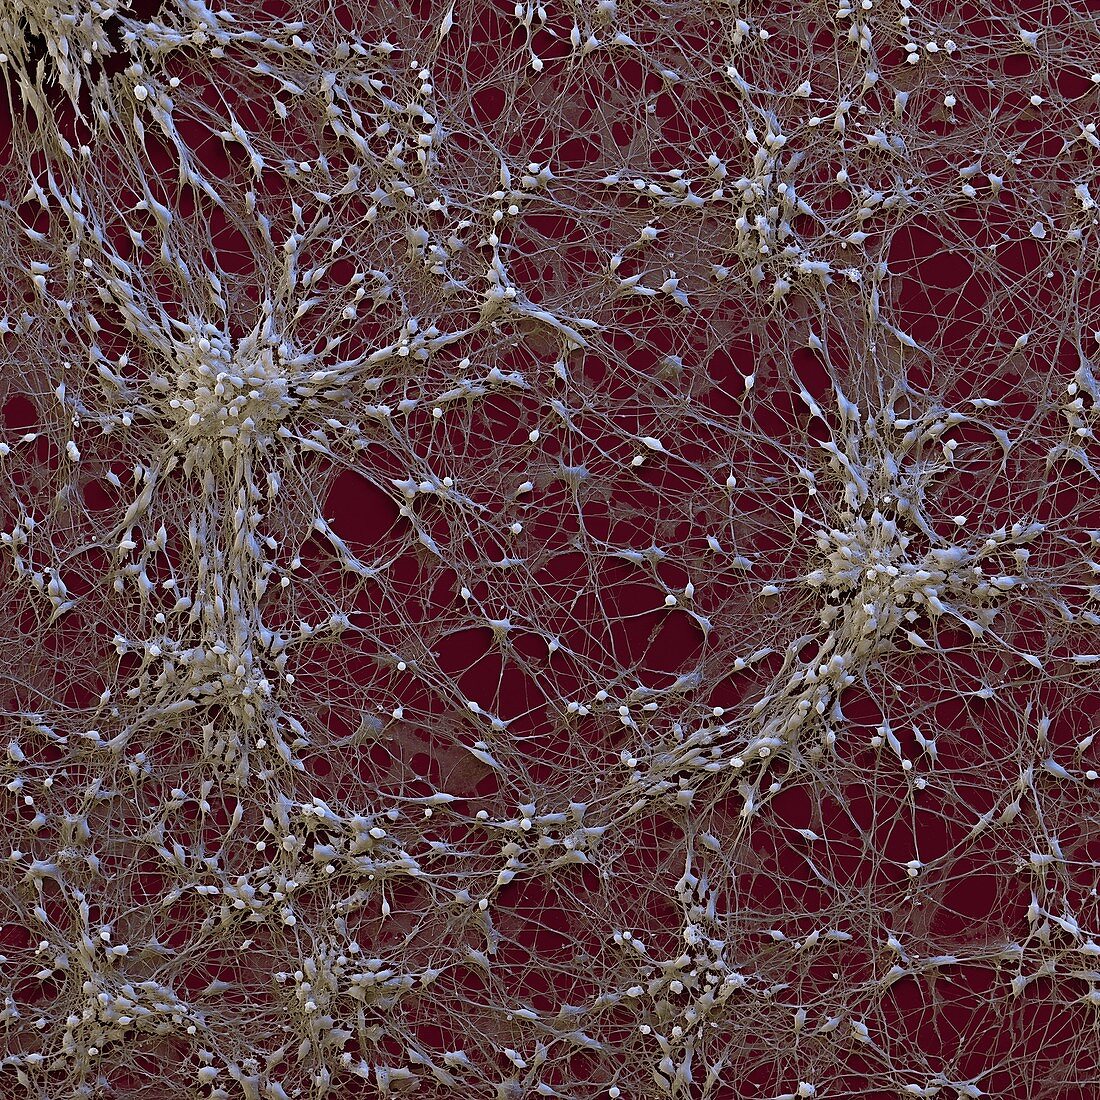 Neural progenitor cells, SEM